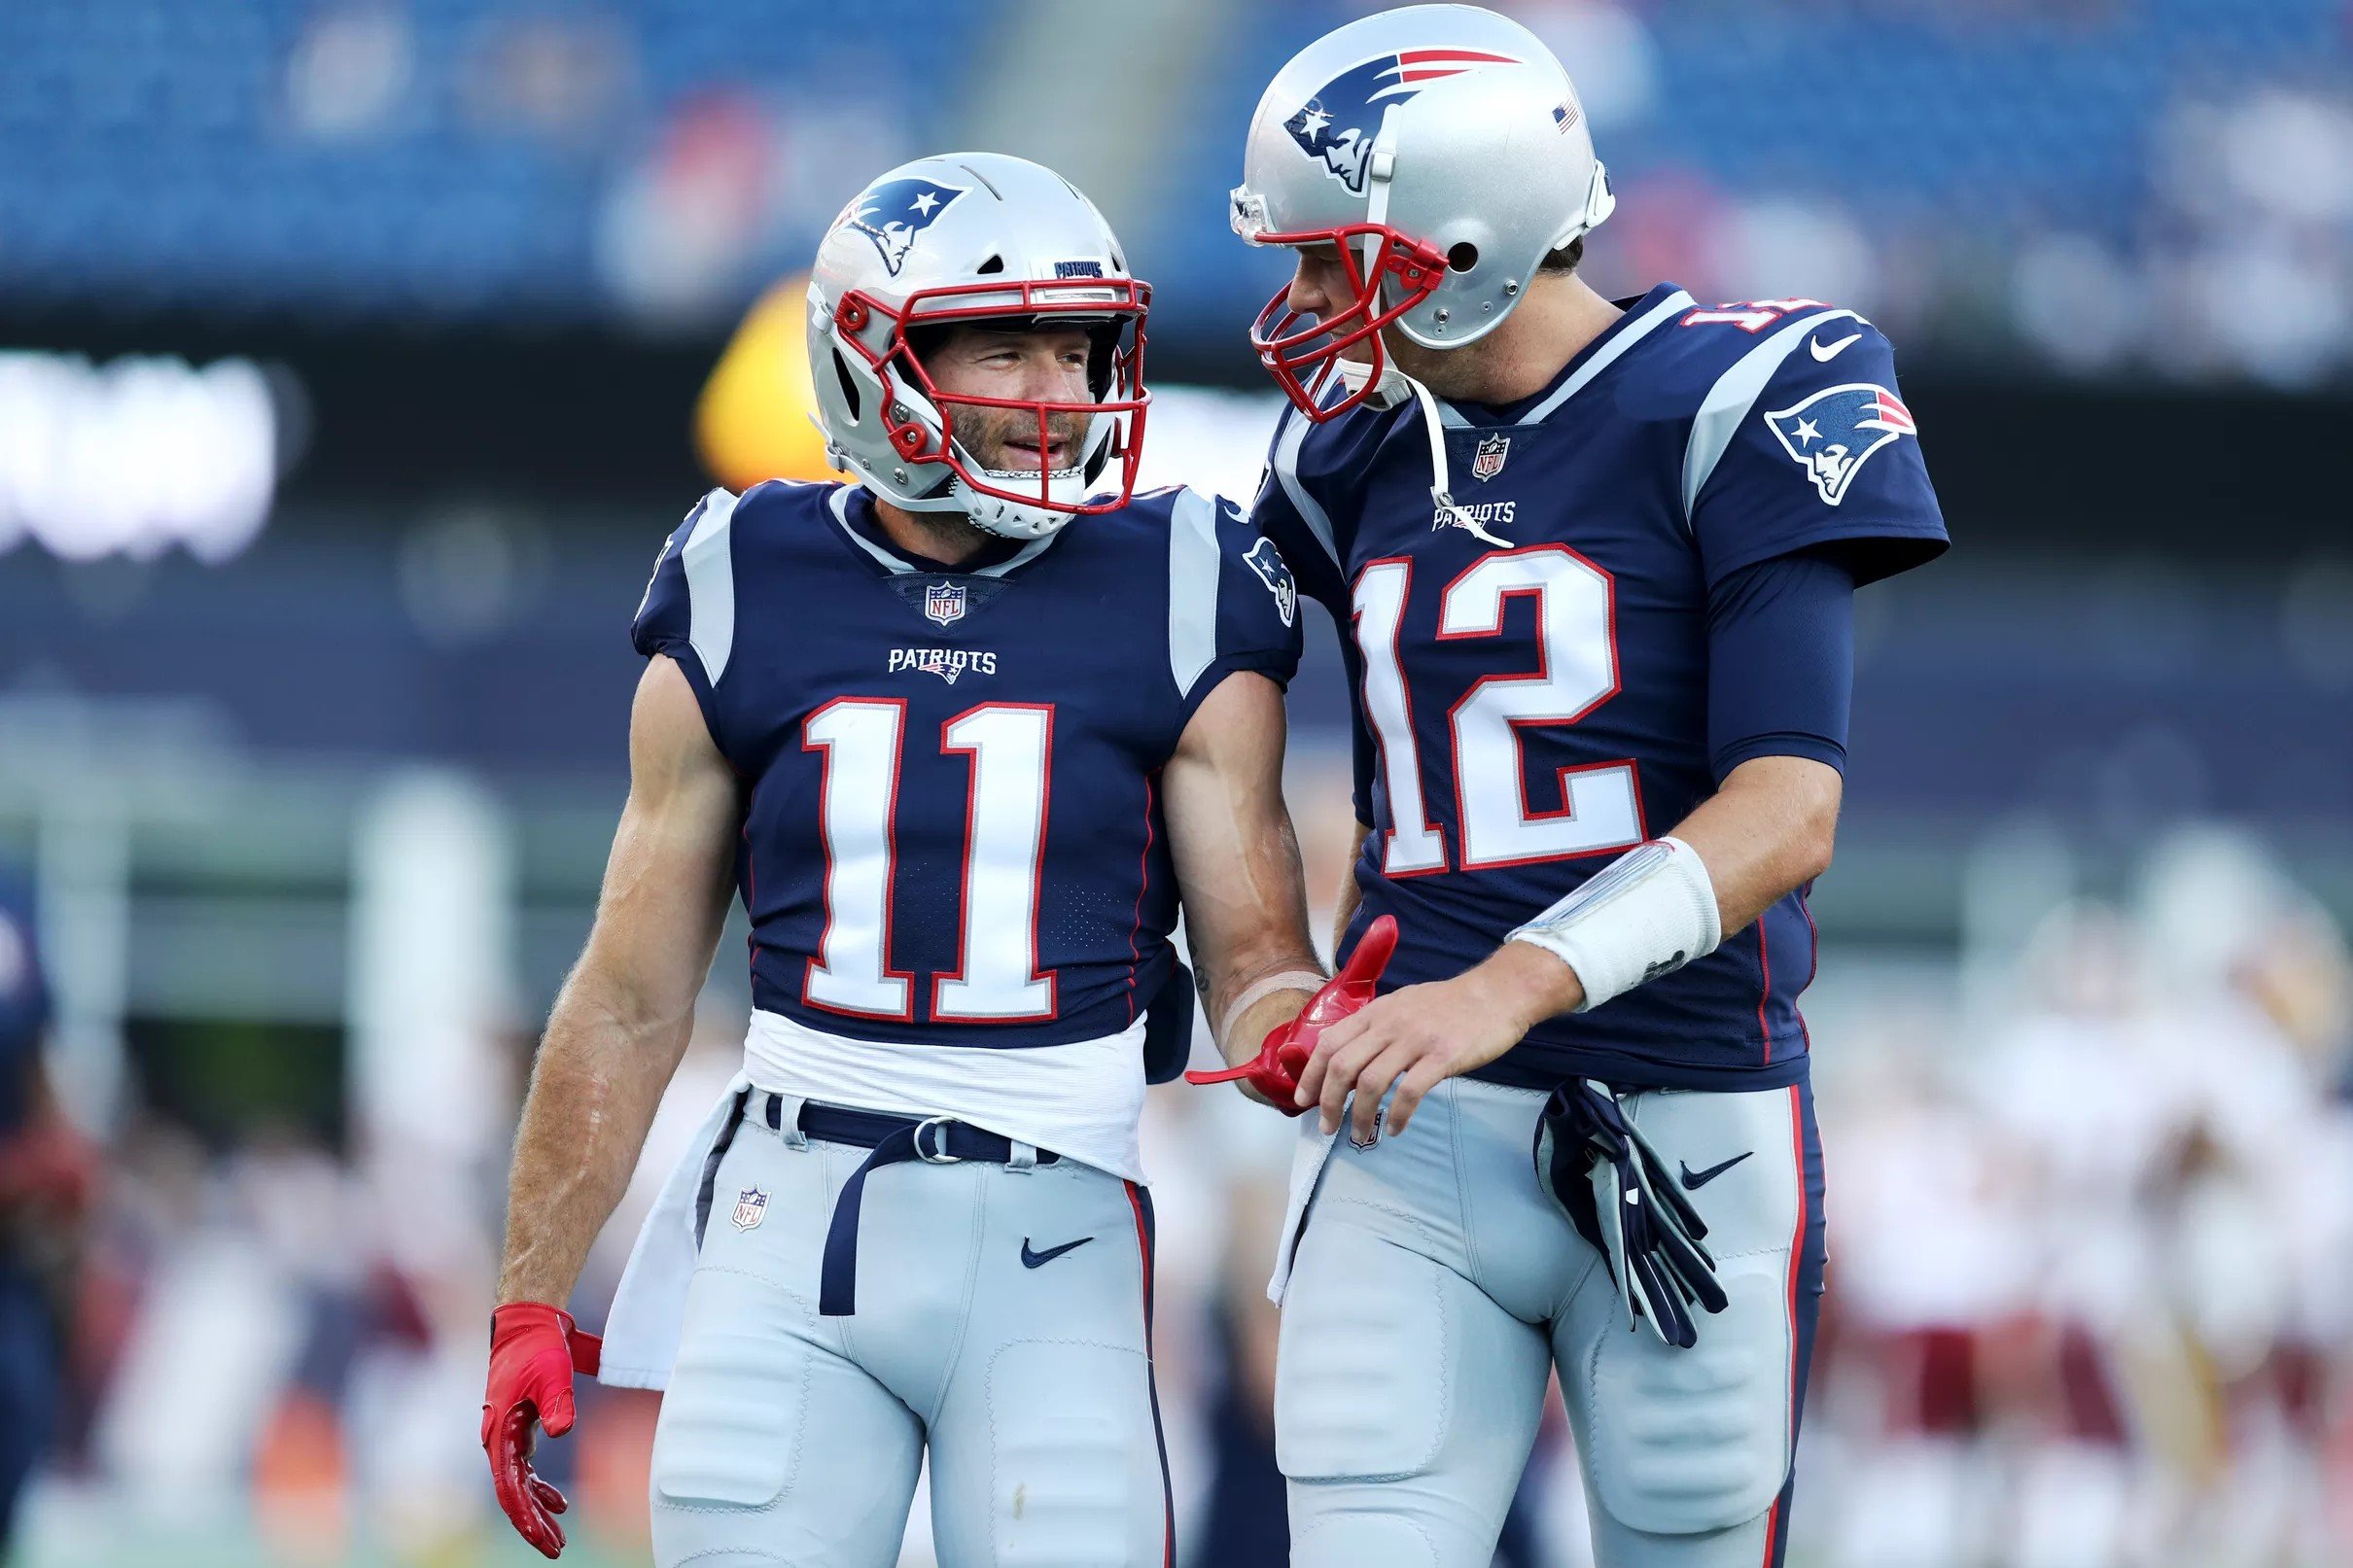 Preseason week 2 Patriots vs Eagles: Live updates and game details